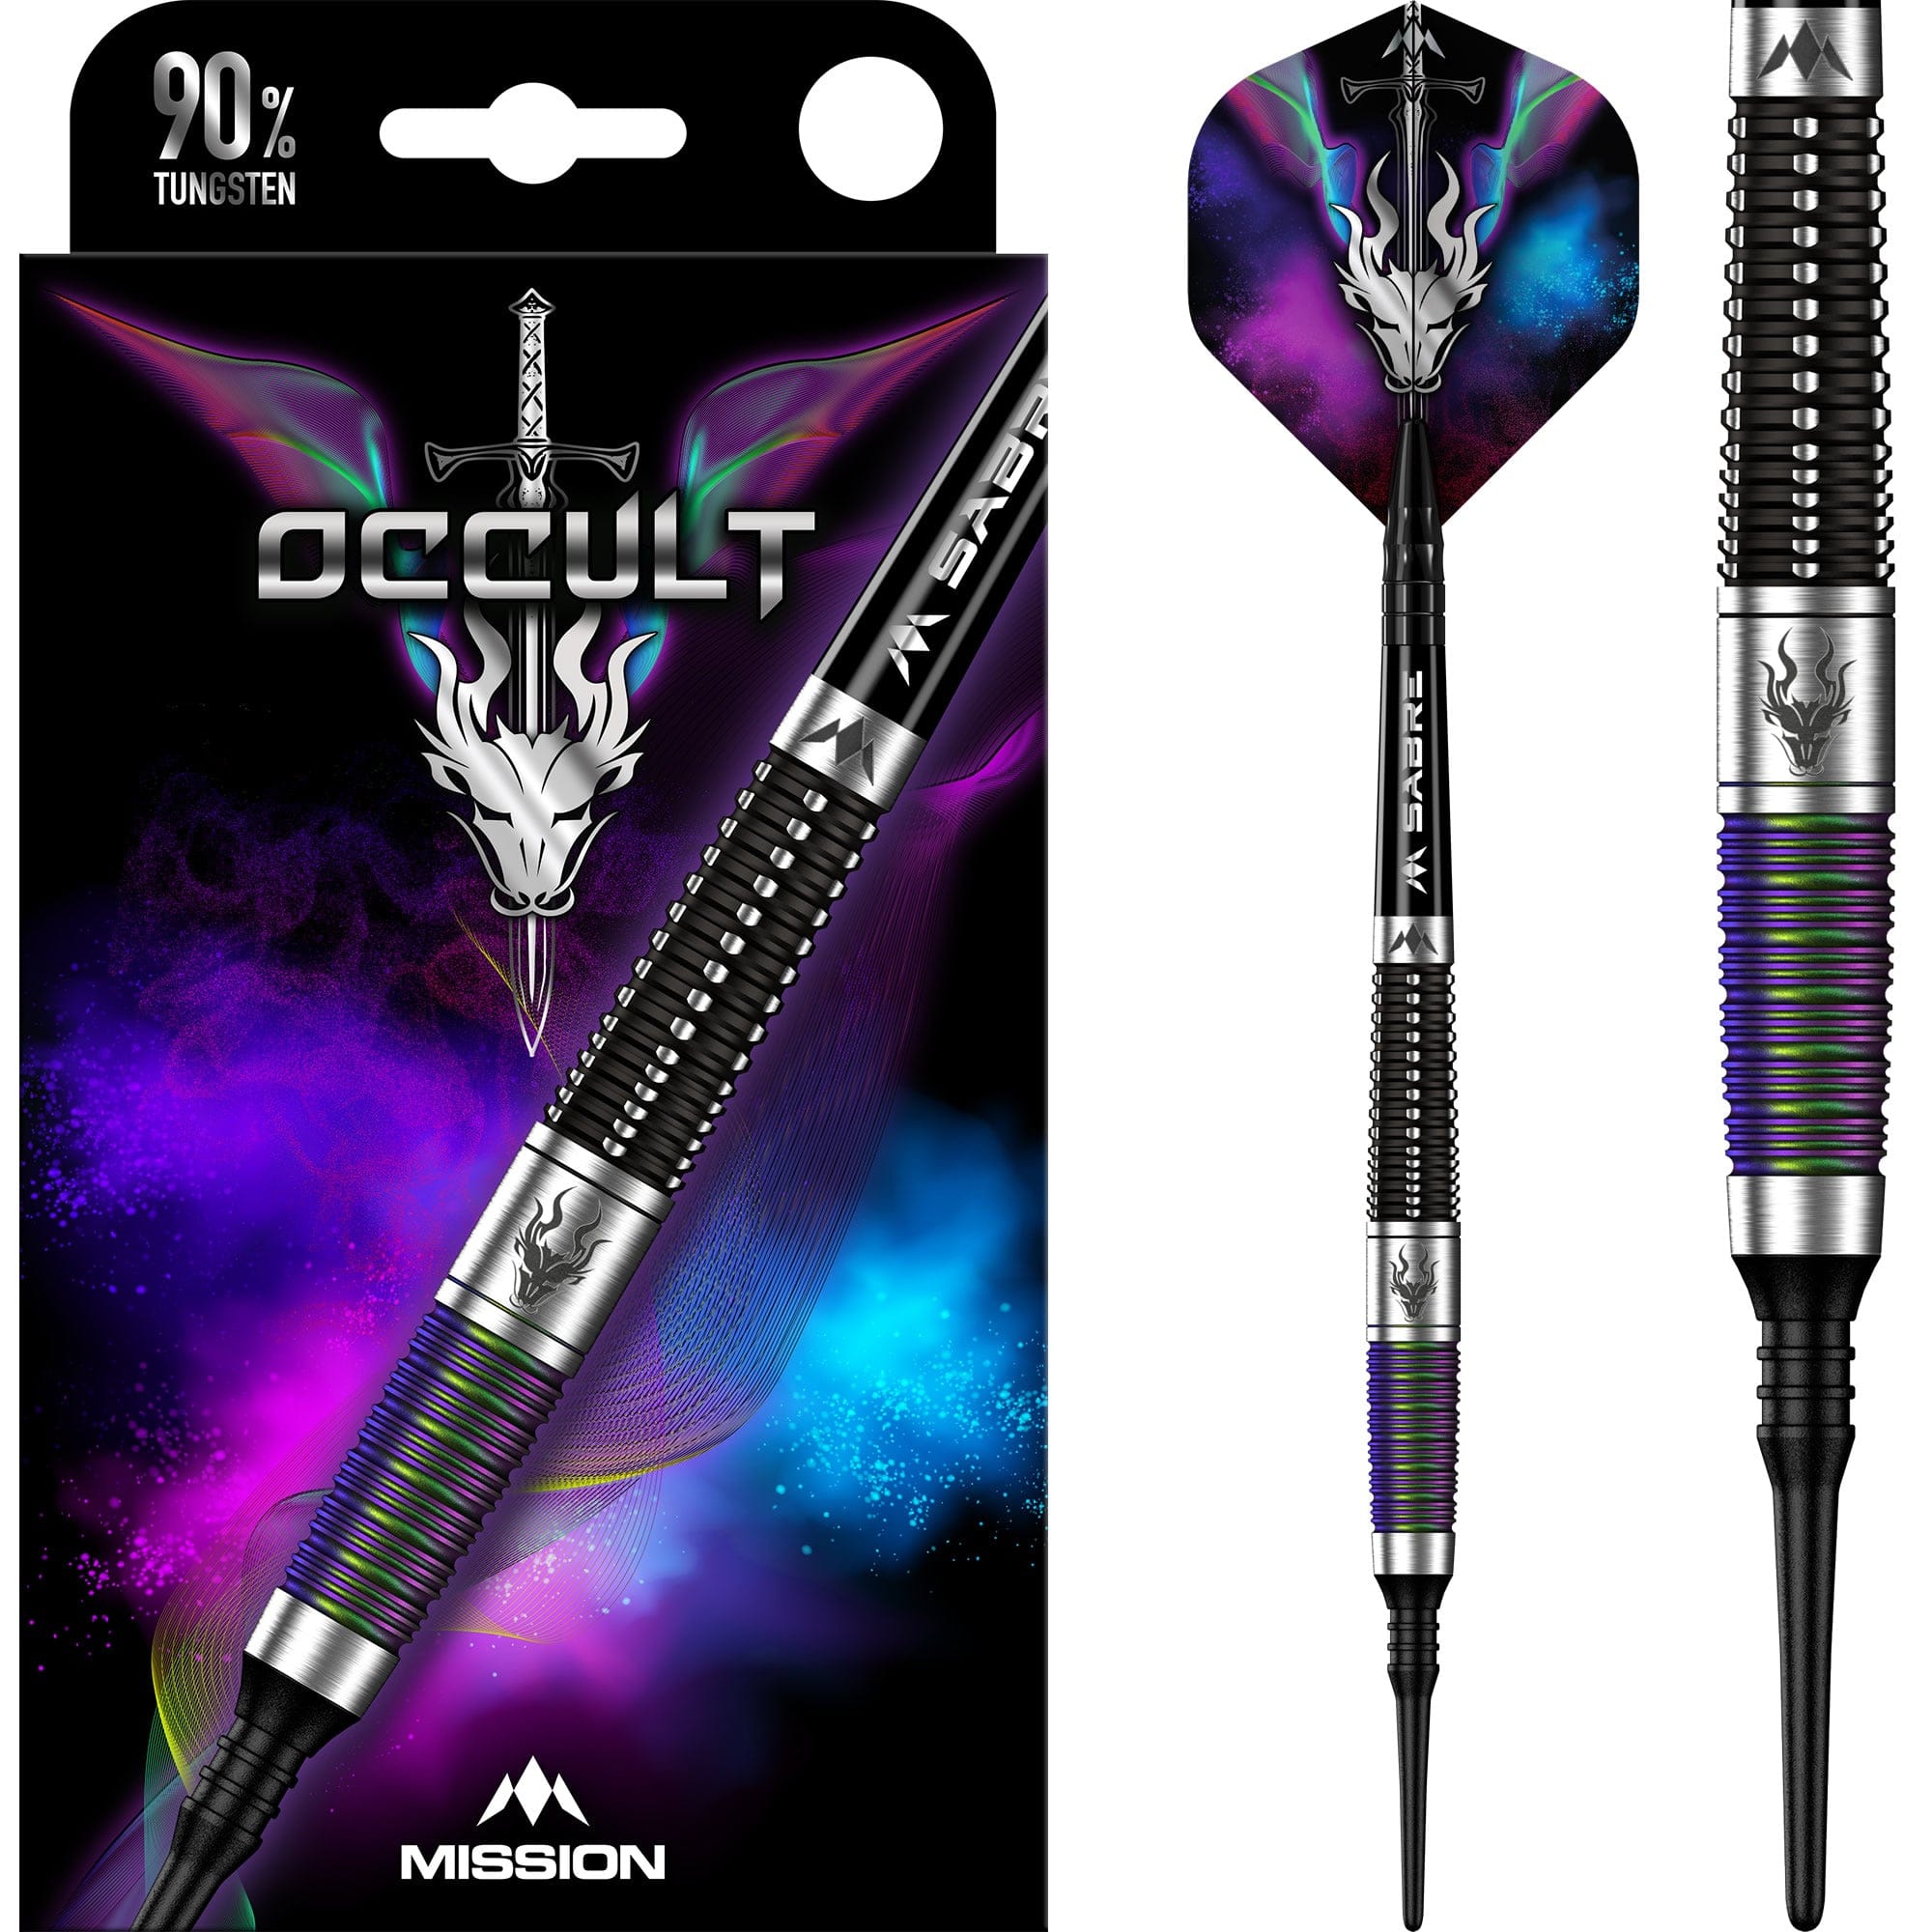 Mission Occult Darts - Soft Tip - 90% - Black & Coral PVD